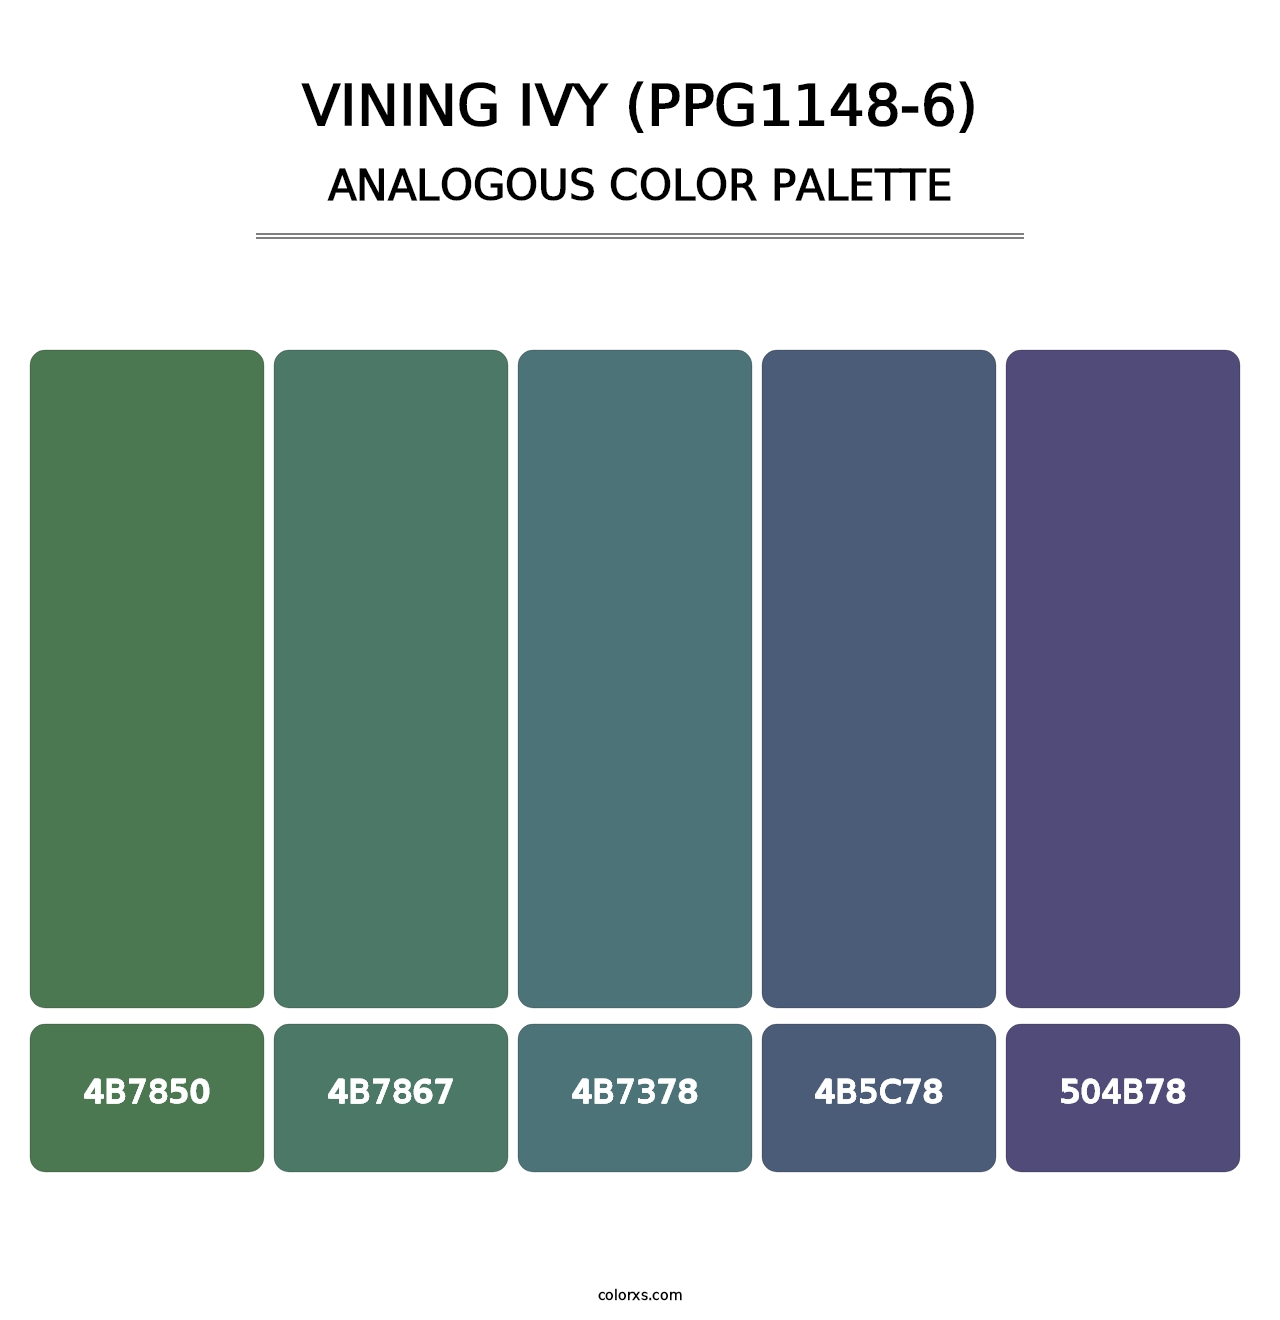 Vining Ivy (PPG1148-6) - Analogous Color Palette